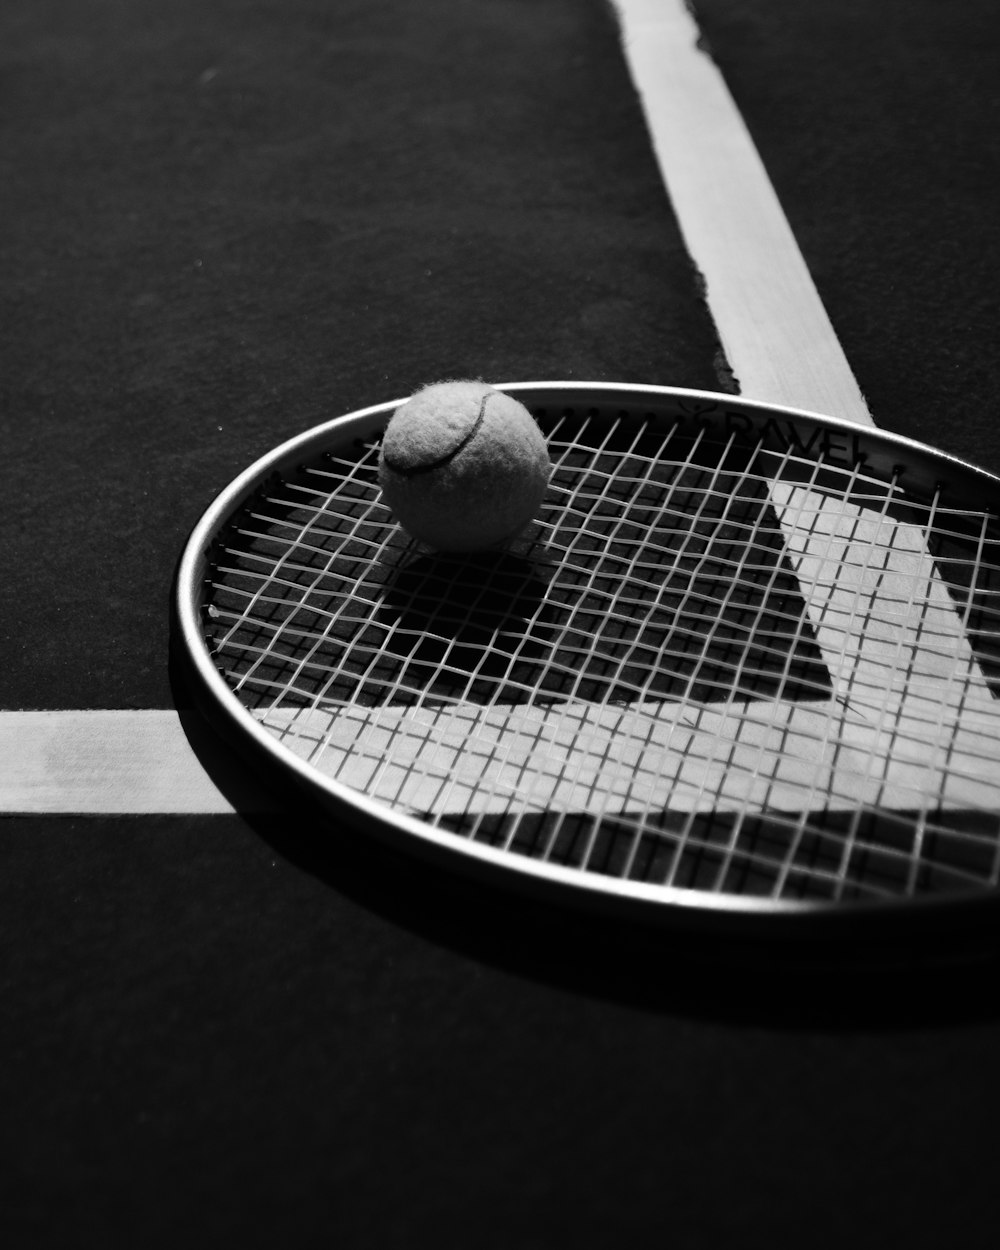 a tennis ball on a racket